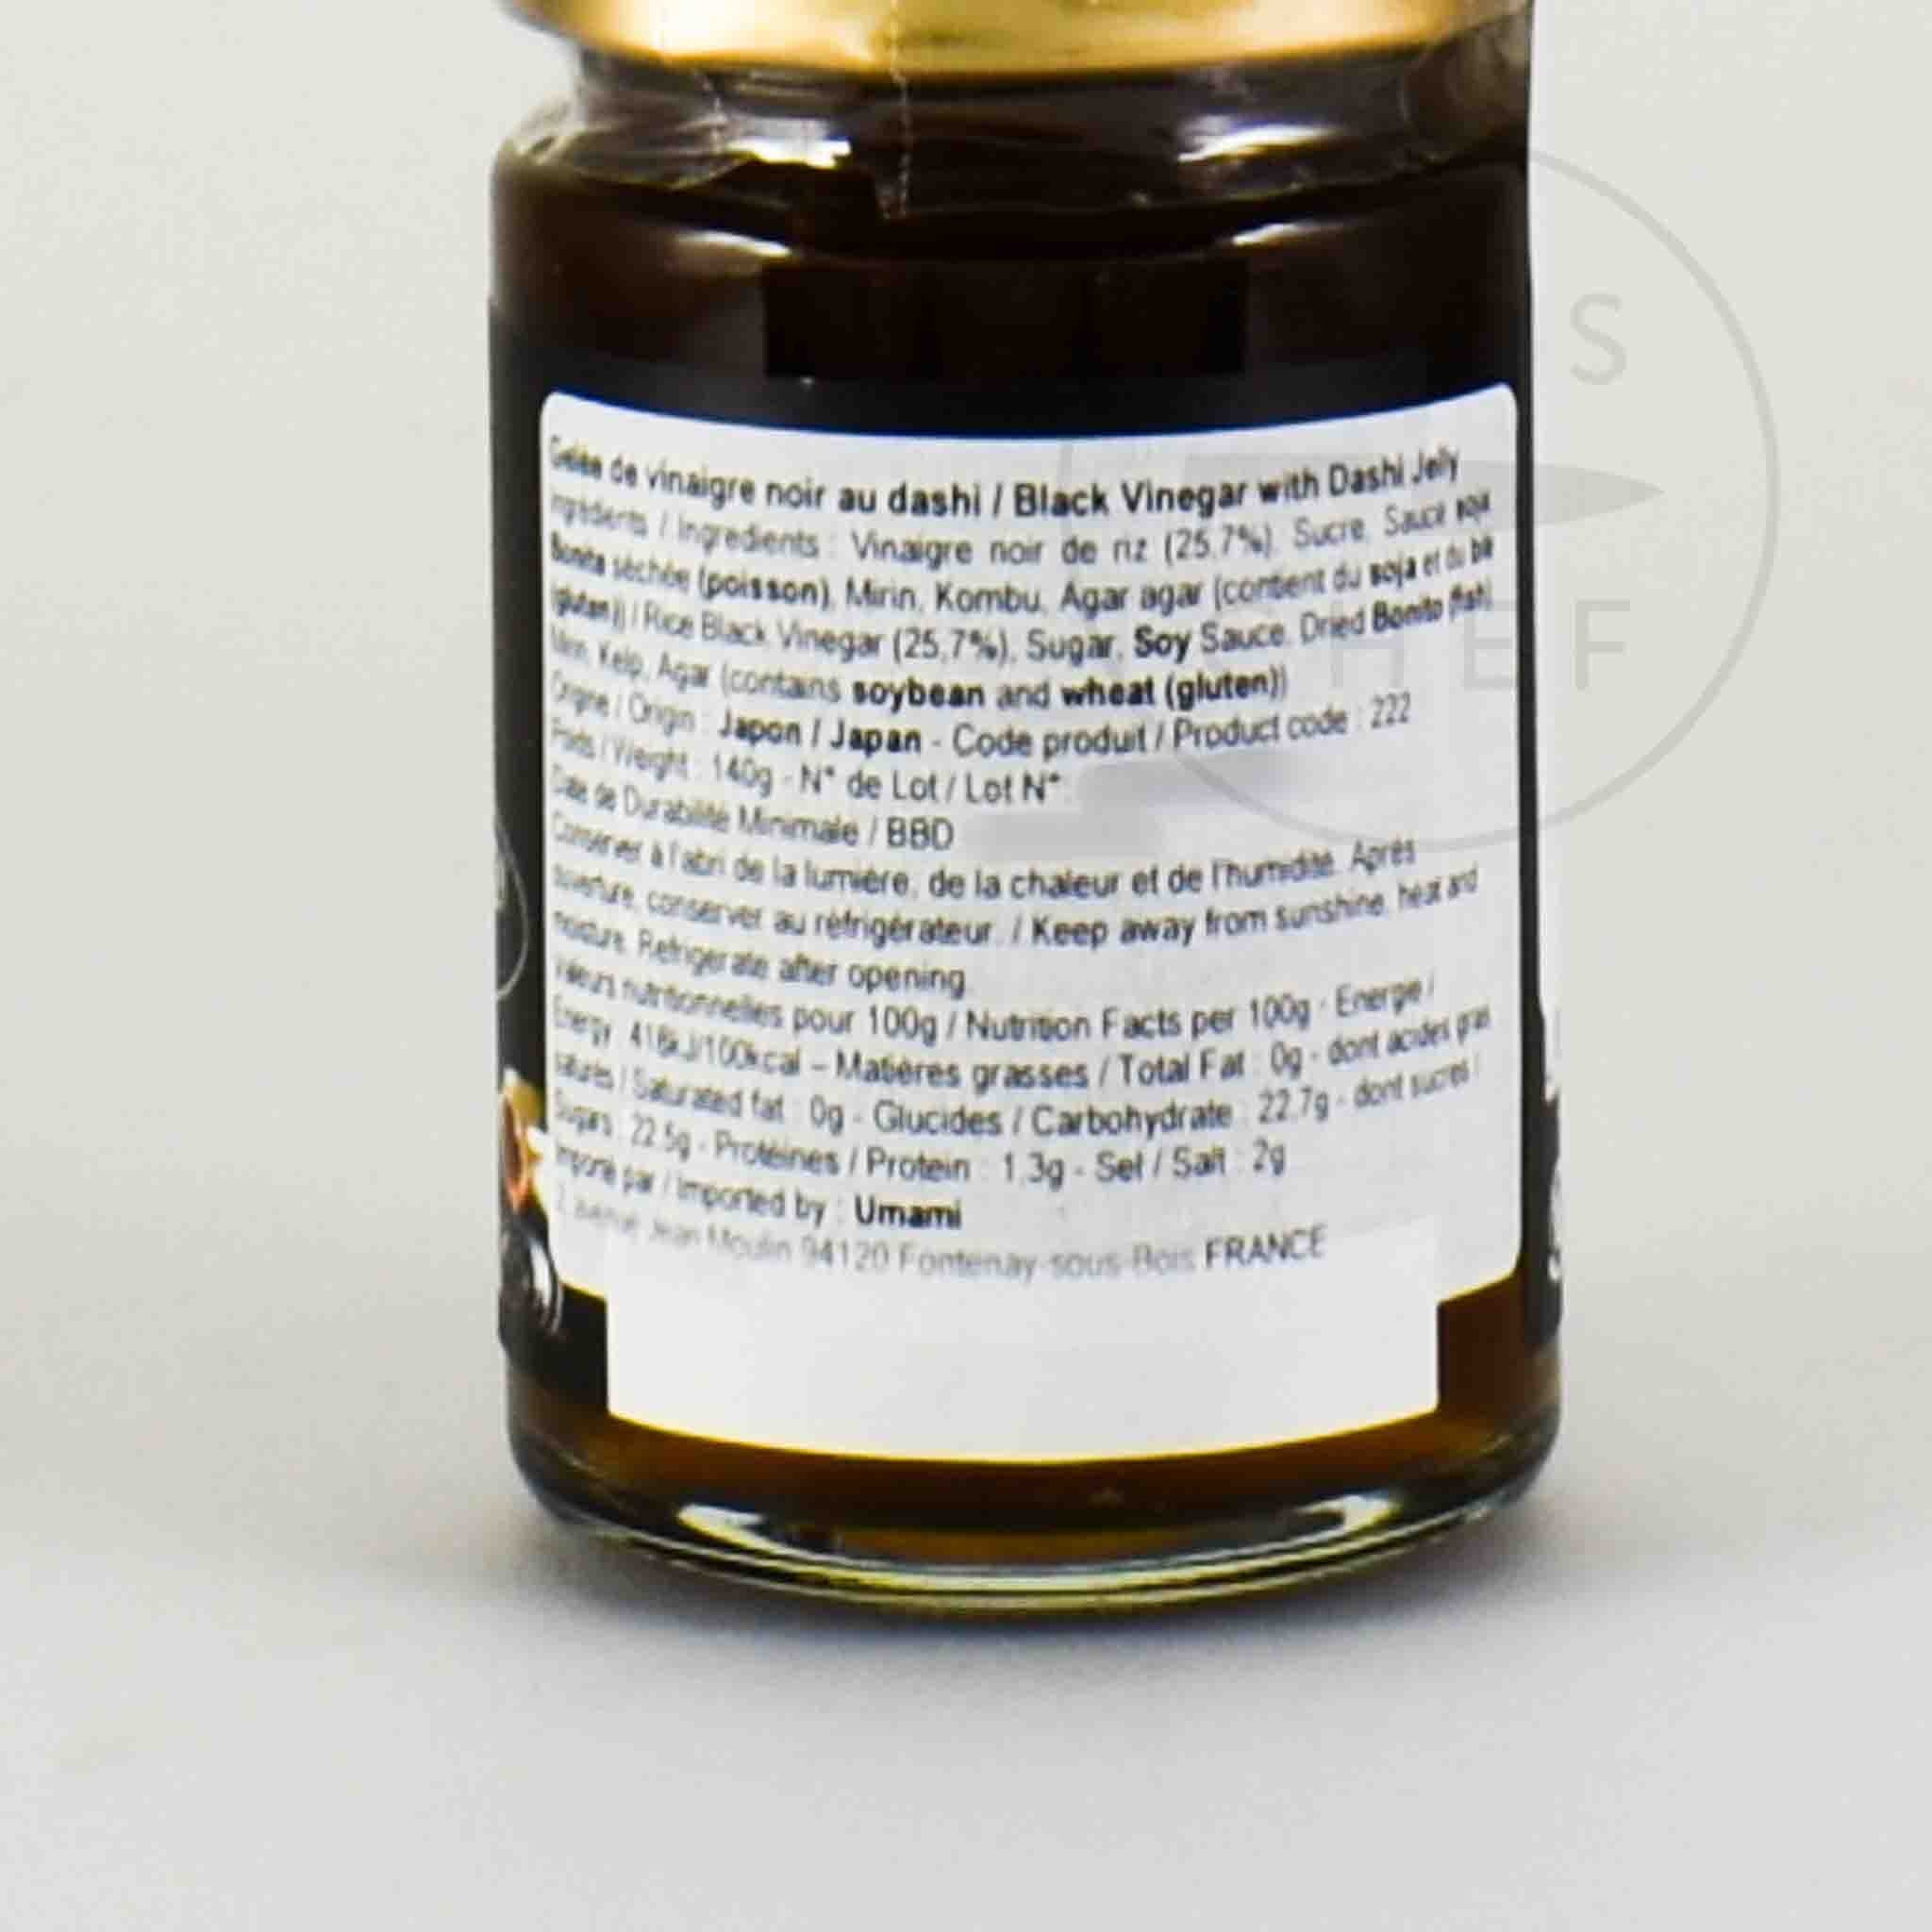 Black Vinegar Jelly With Dashi 140g Ingredients